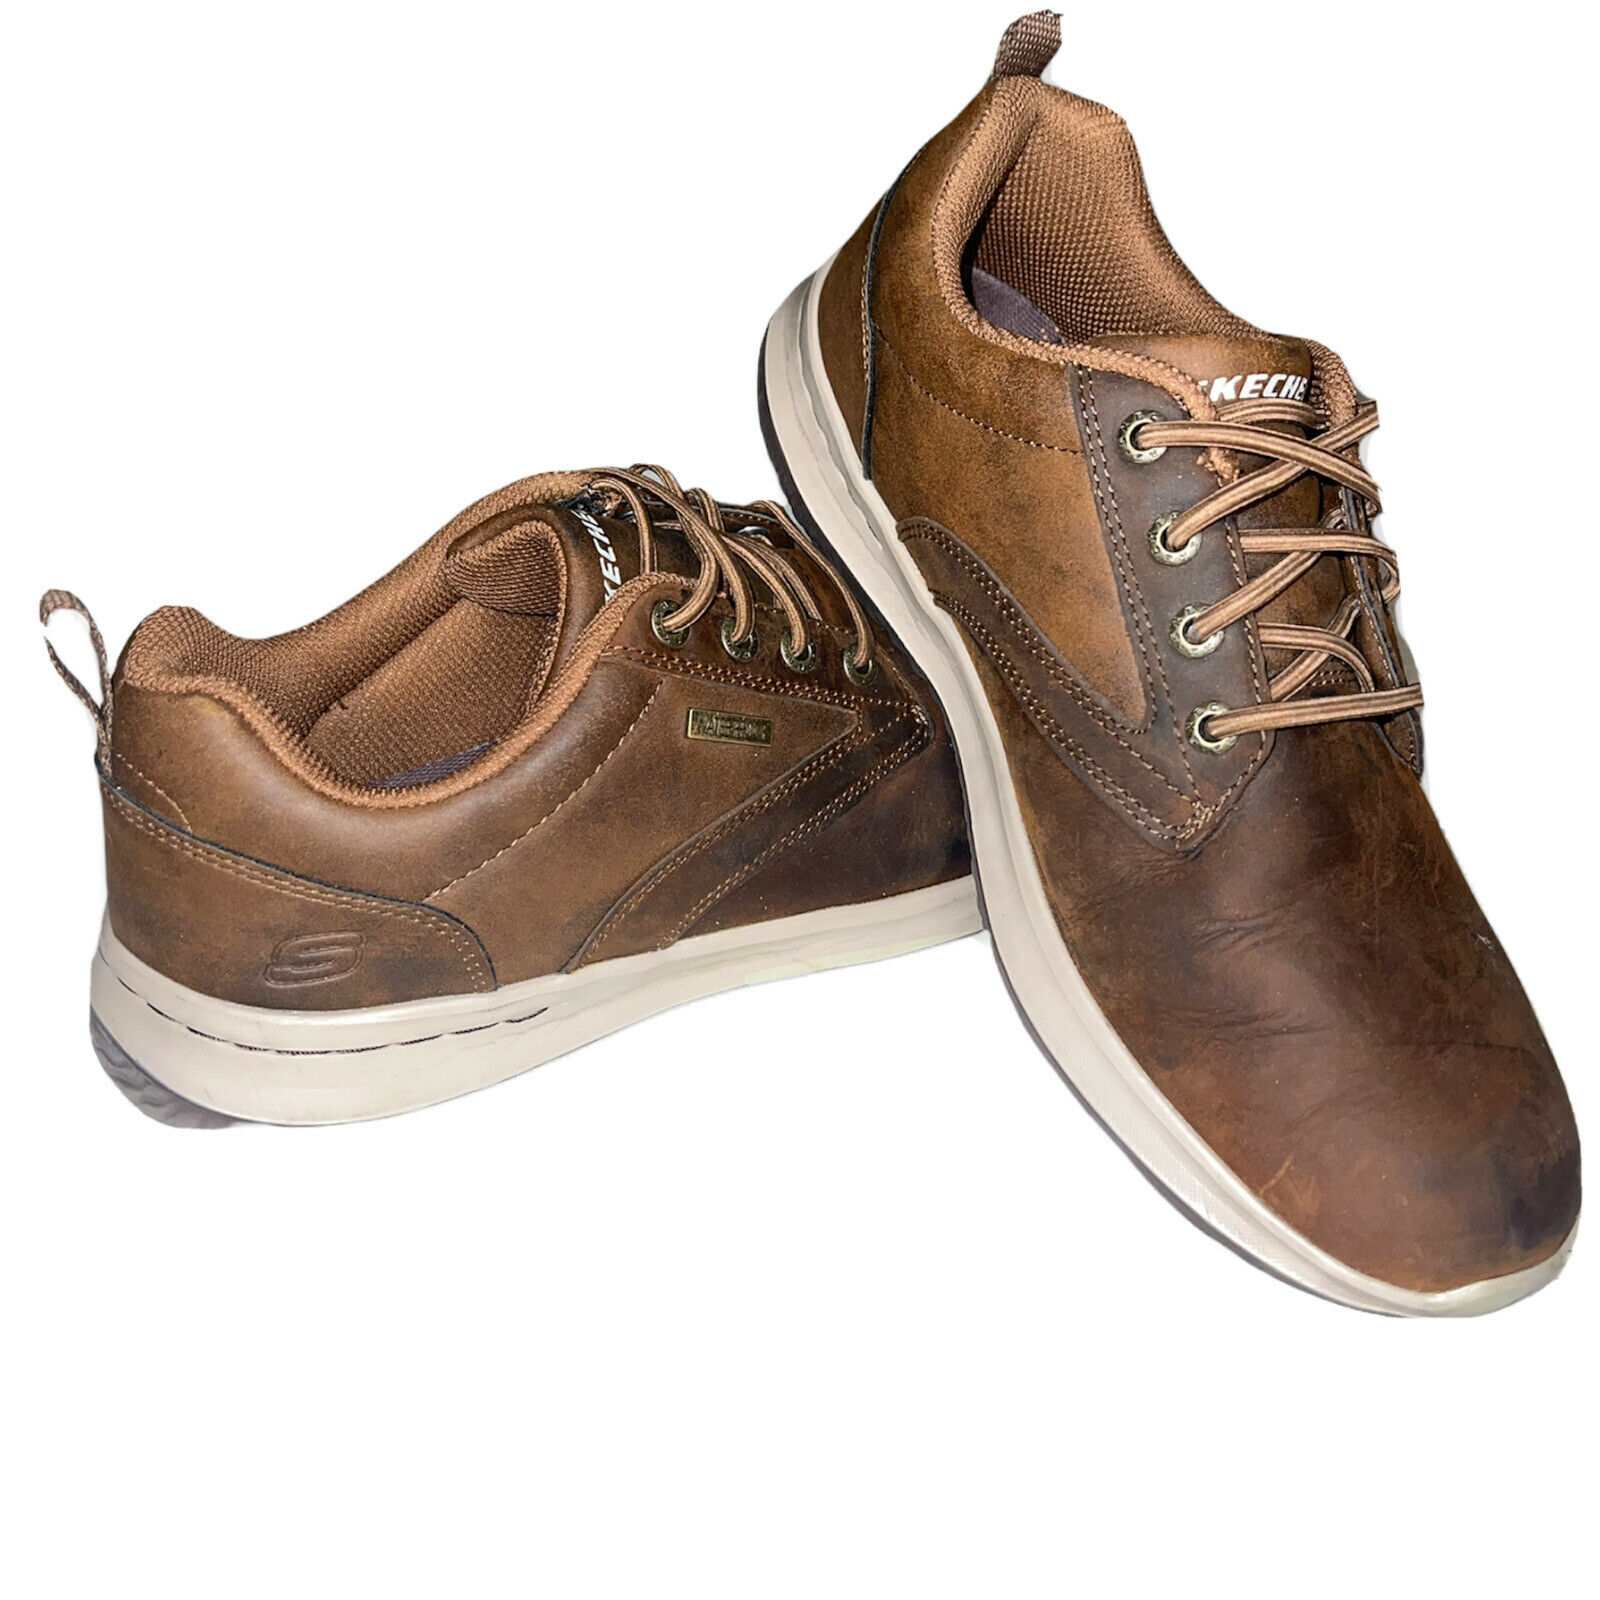 Men's Skechers Delson Antigo Slip On Shoe Brown Leather Size 10 US - Excellent